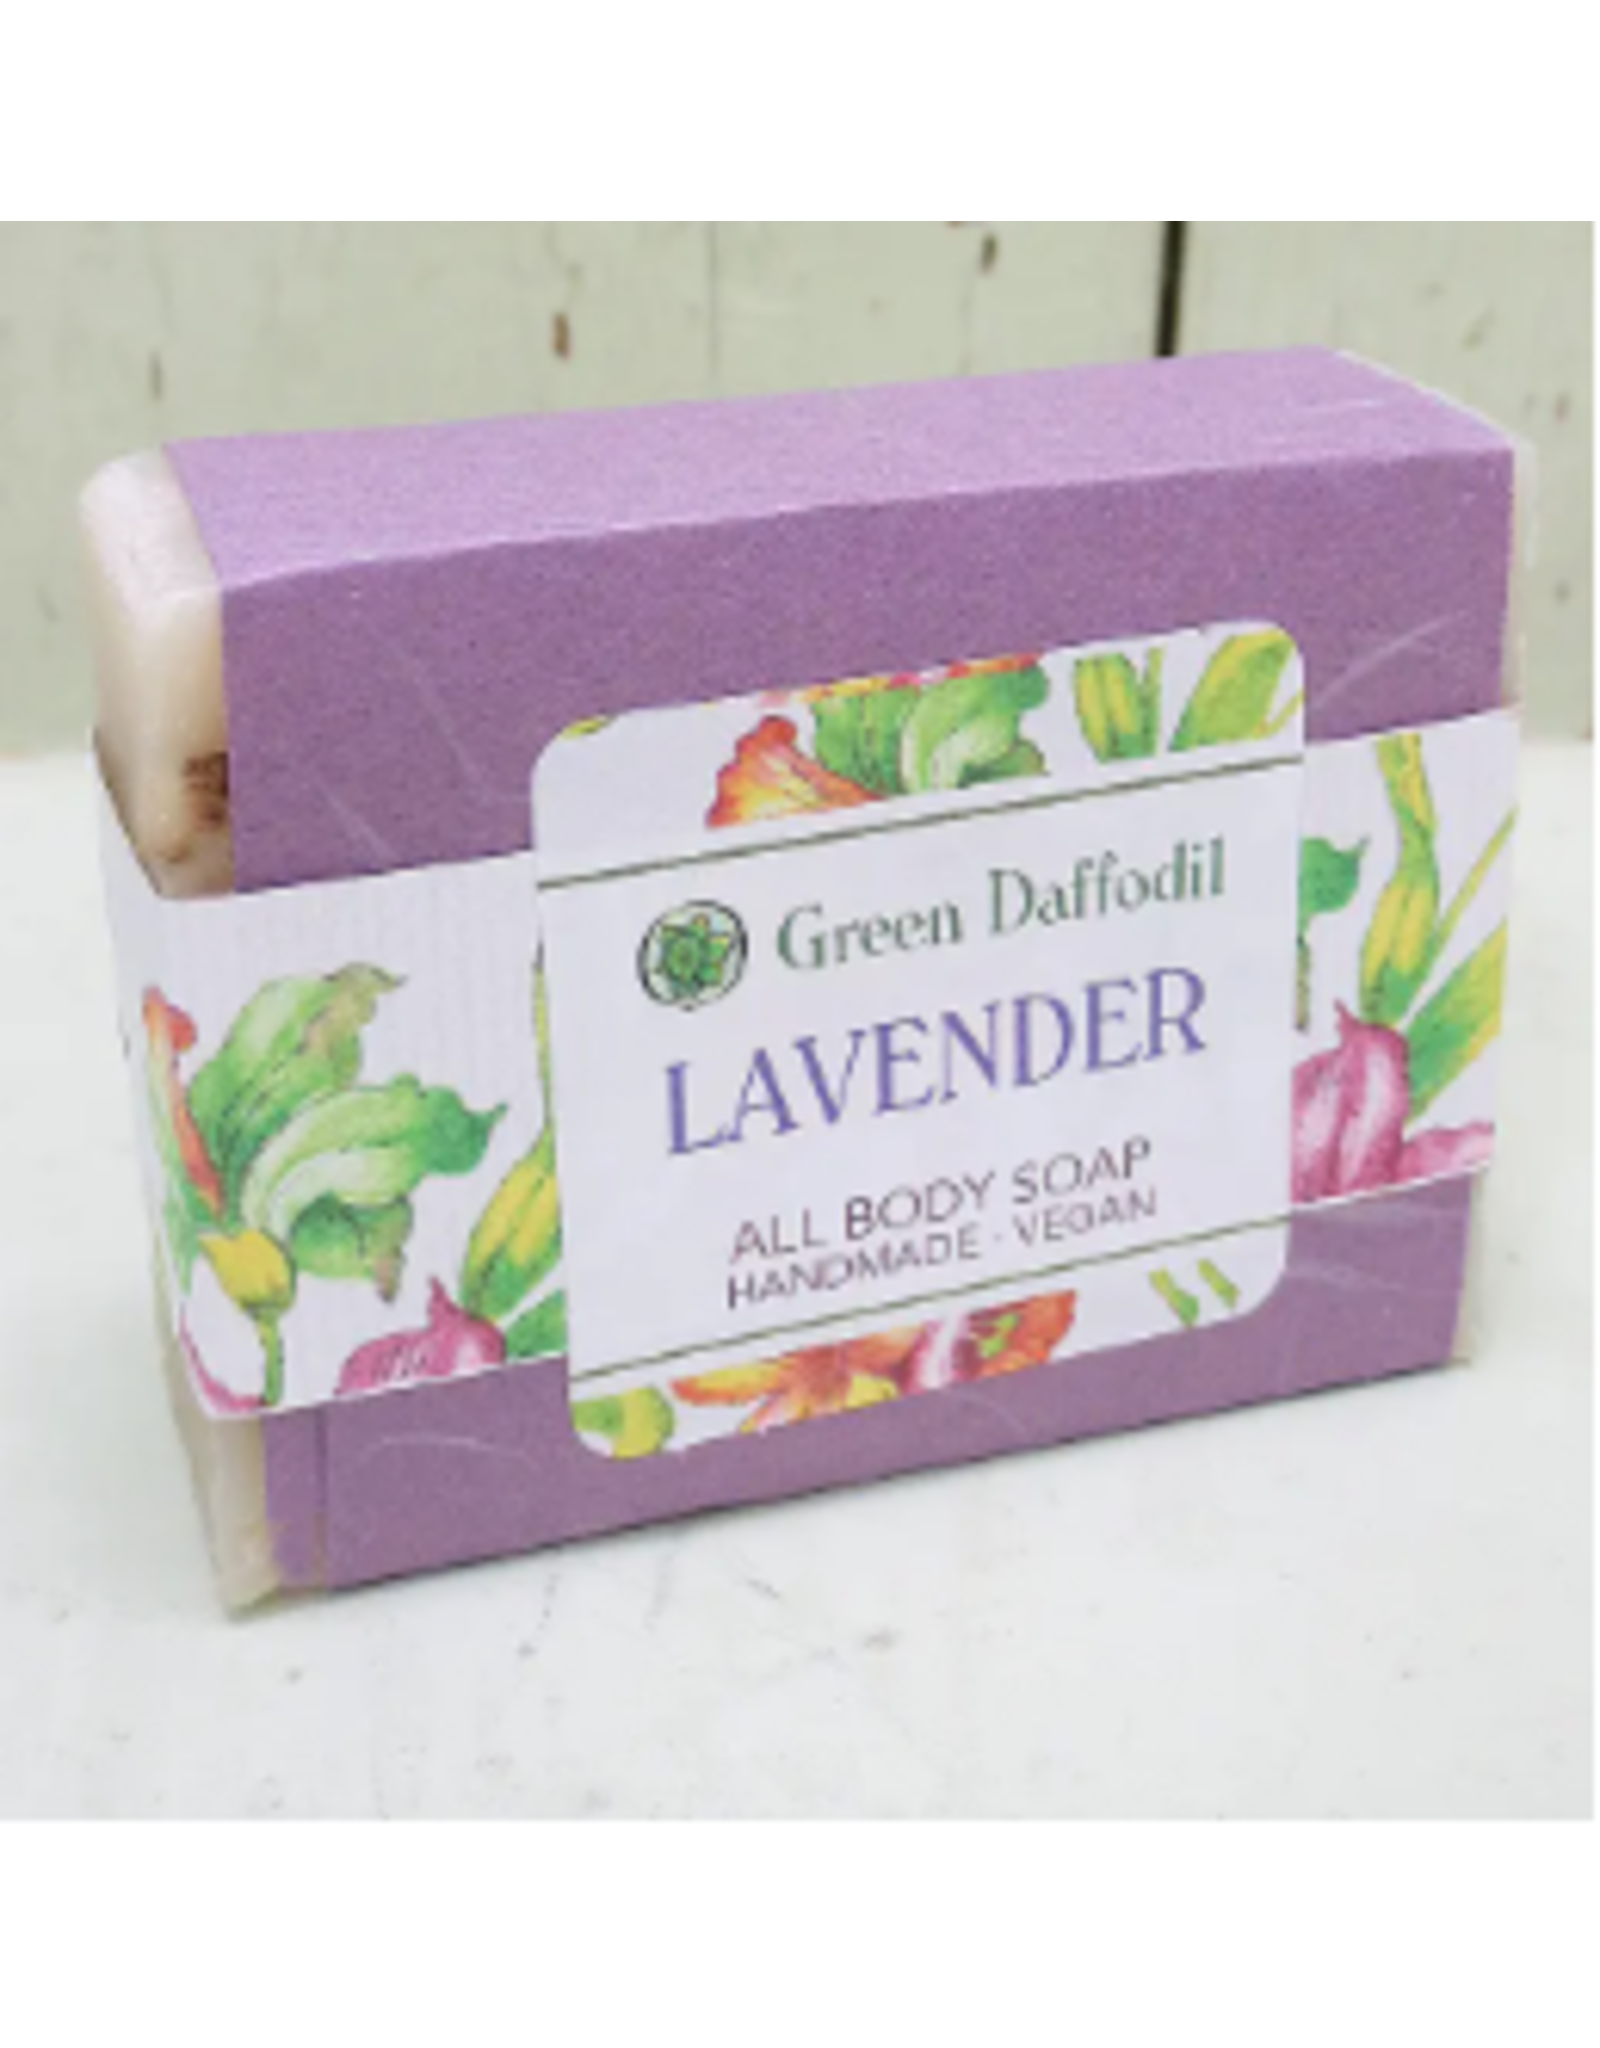 Green Daffodil Bath & Body Lavender Natural Handmade Bar Soap